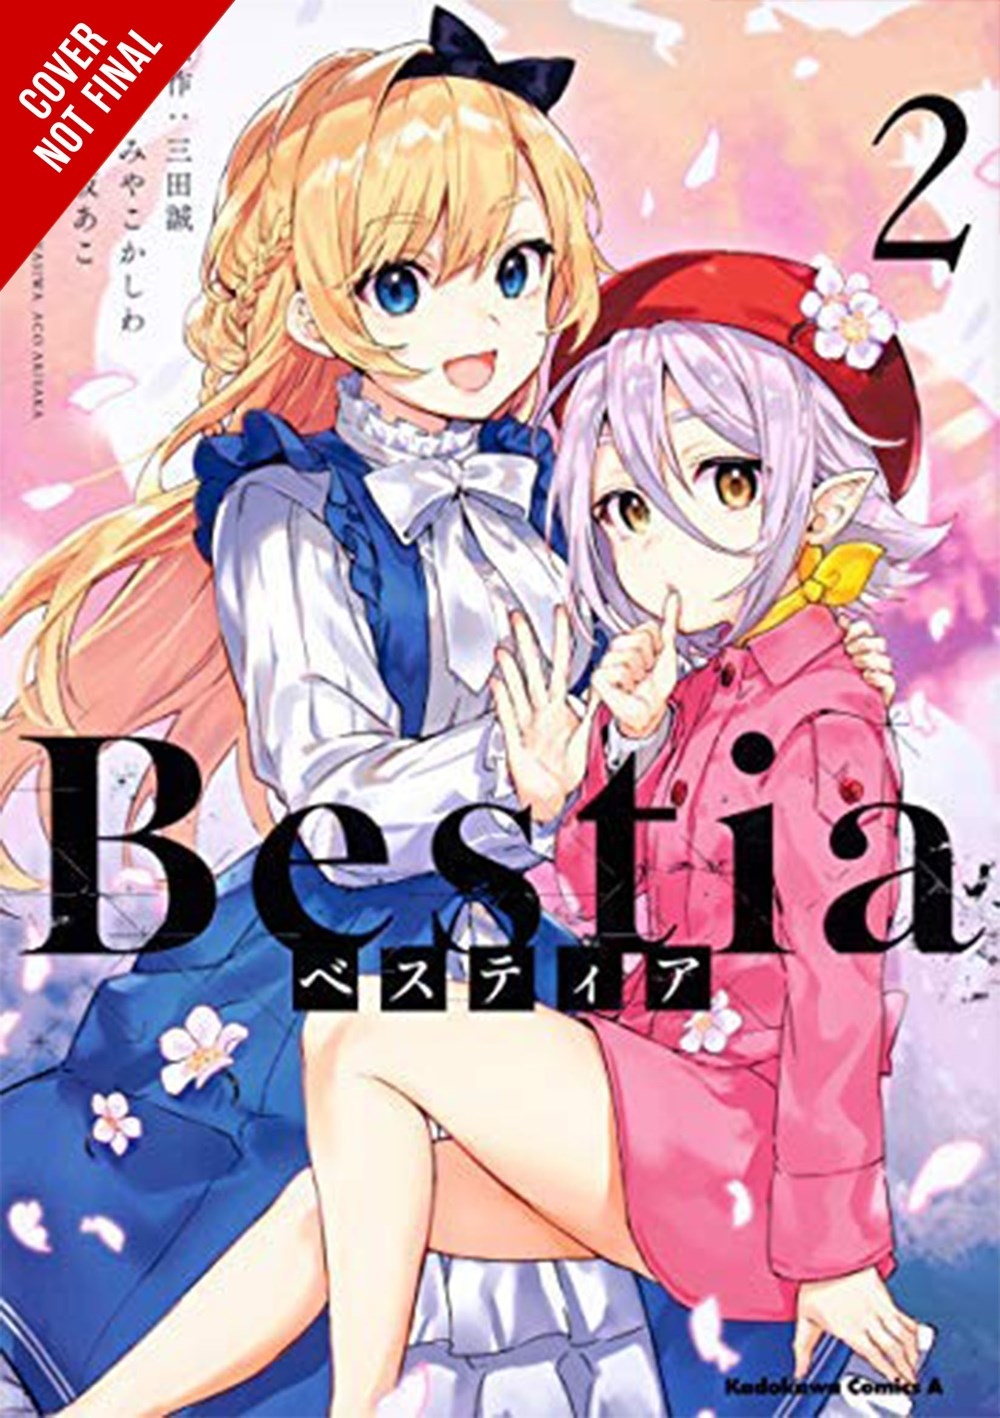 Bestia Manga Volume 2